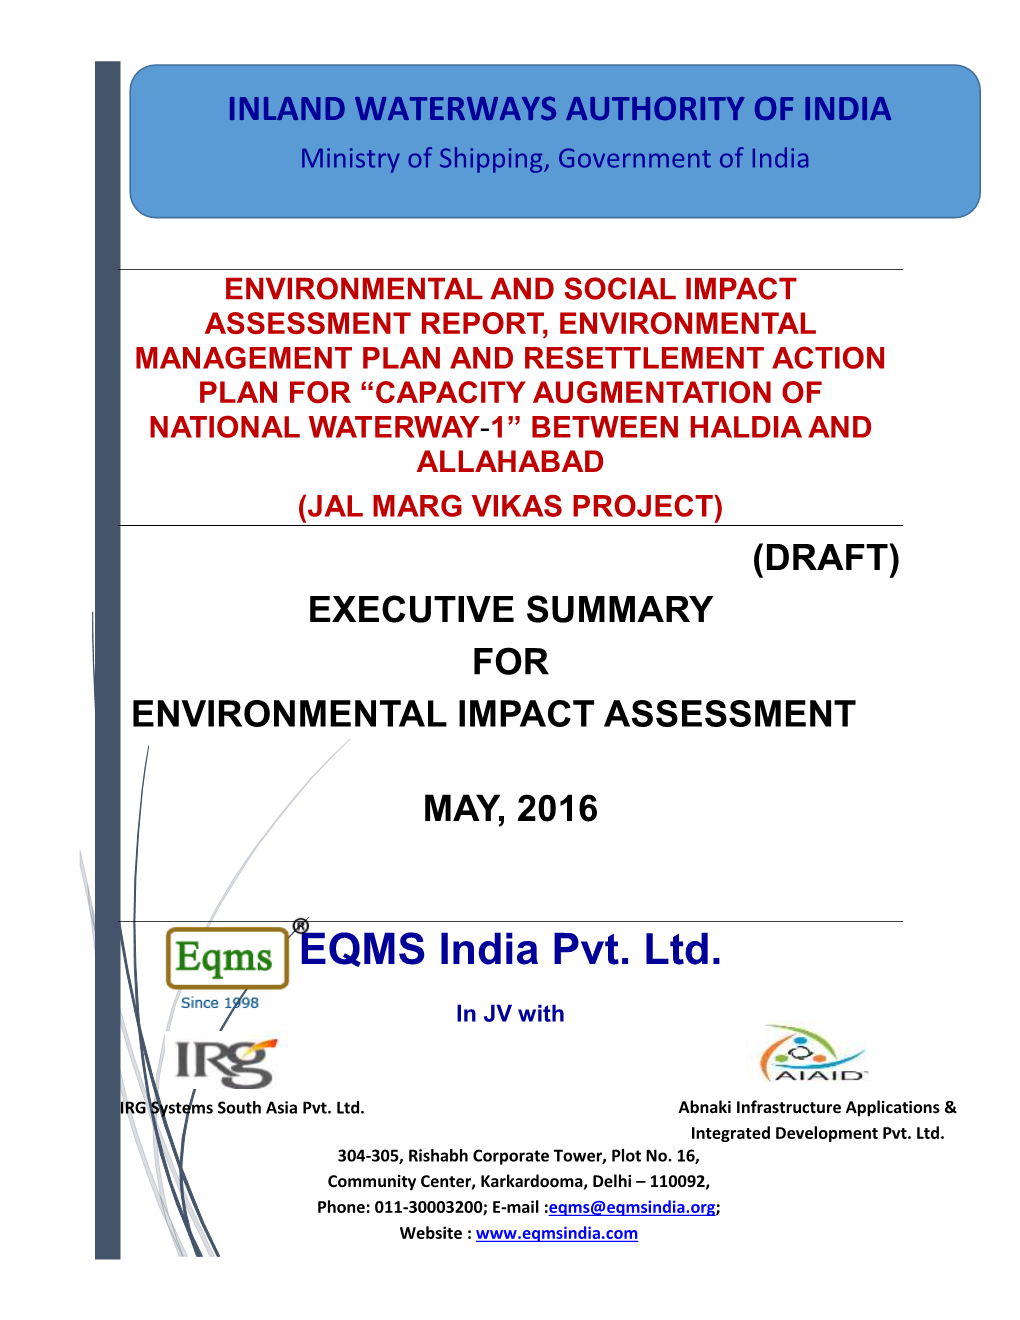 EQMS India Pvt. Ltd